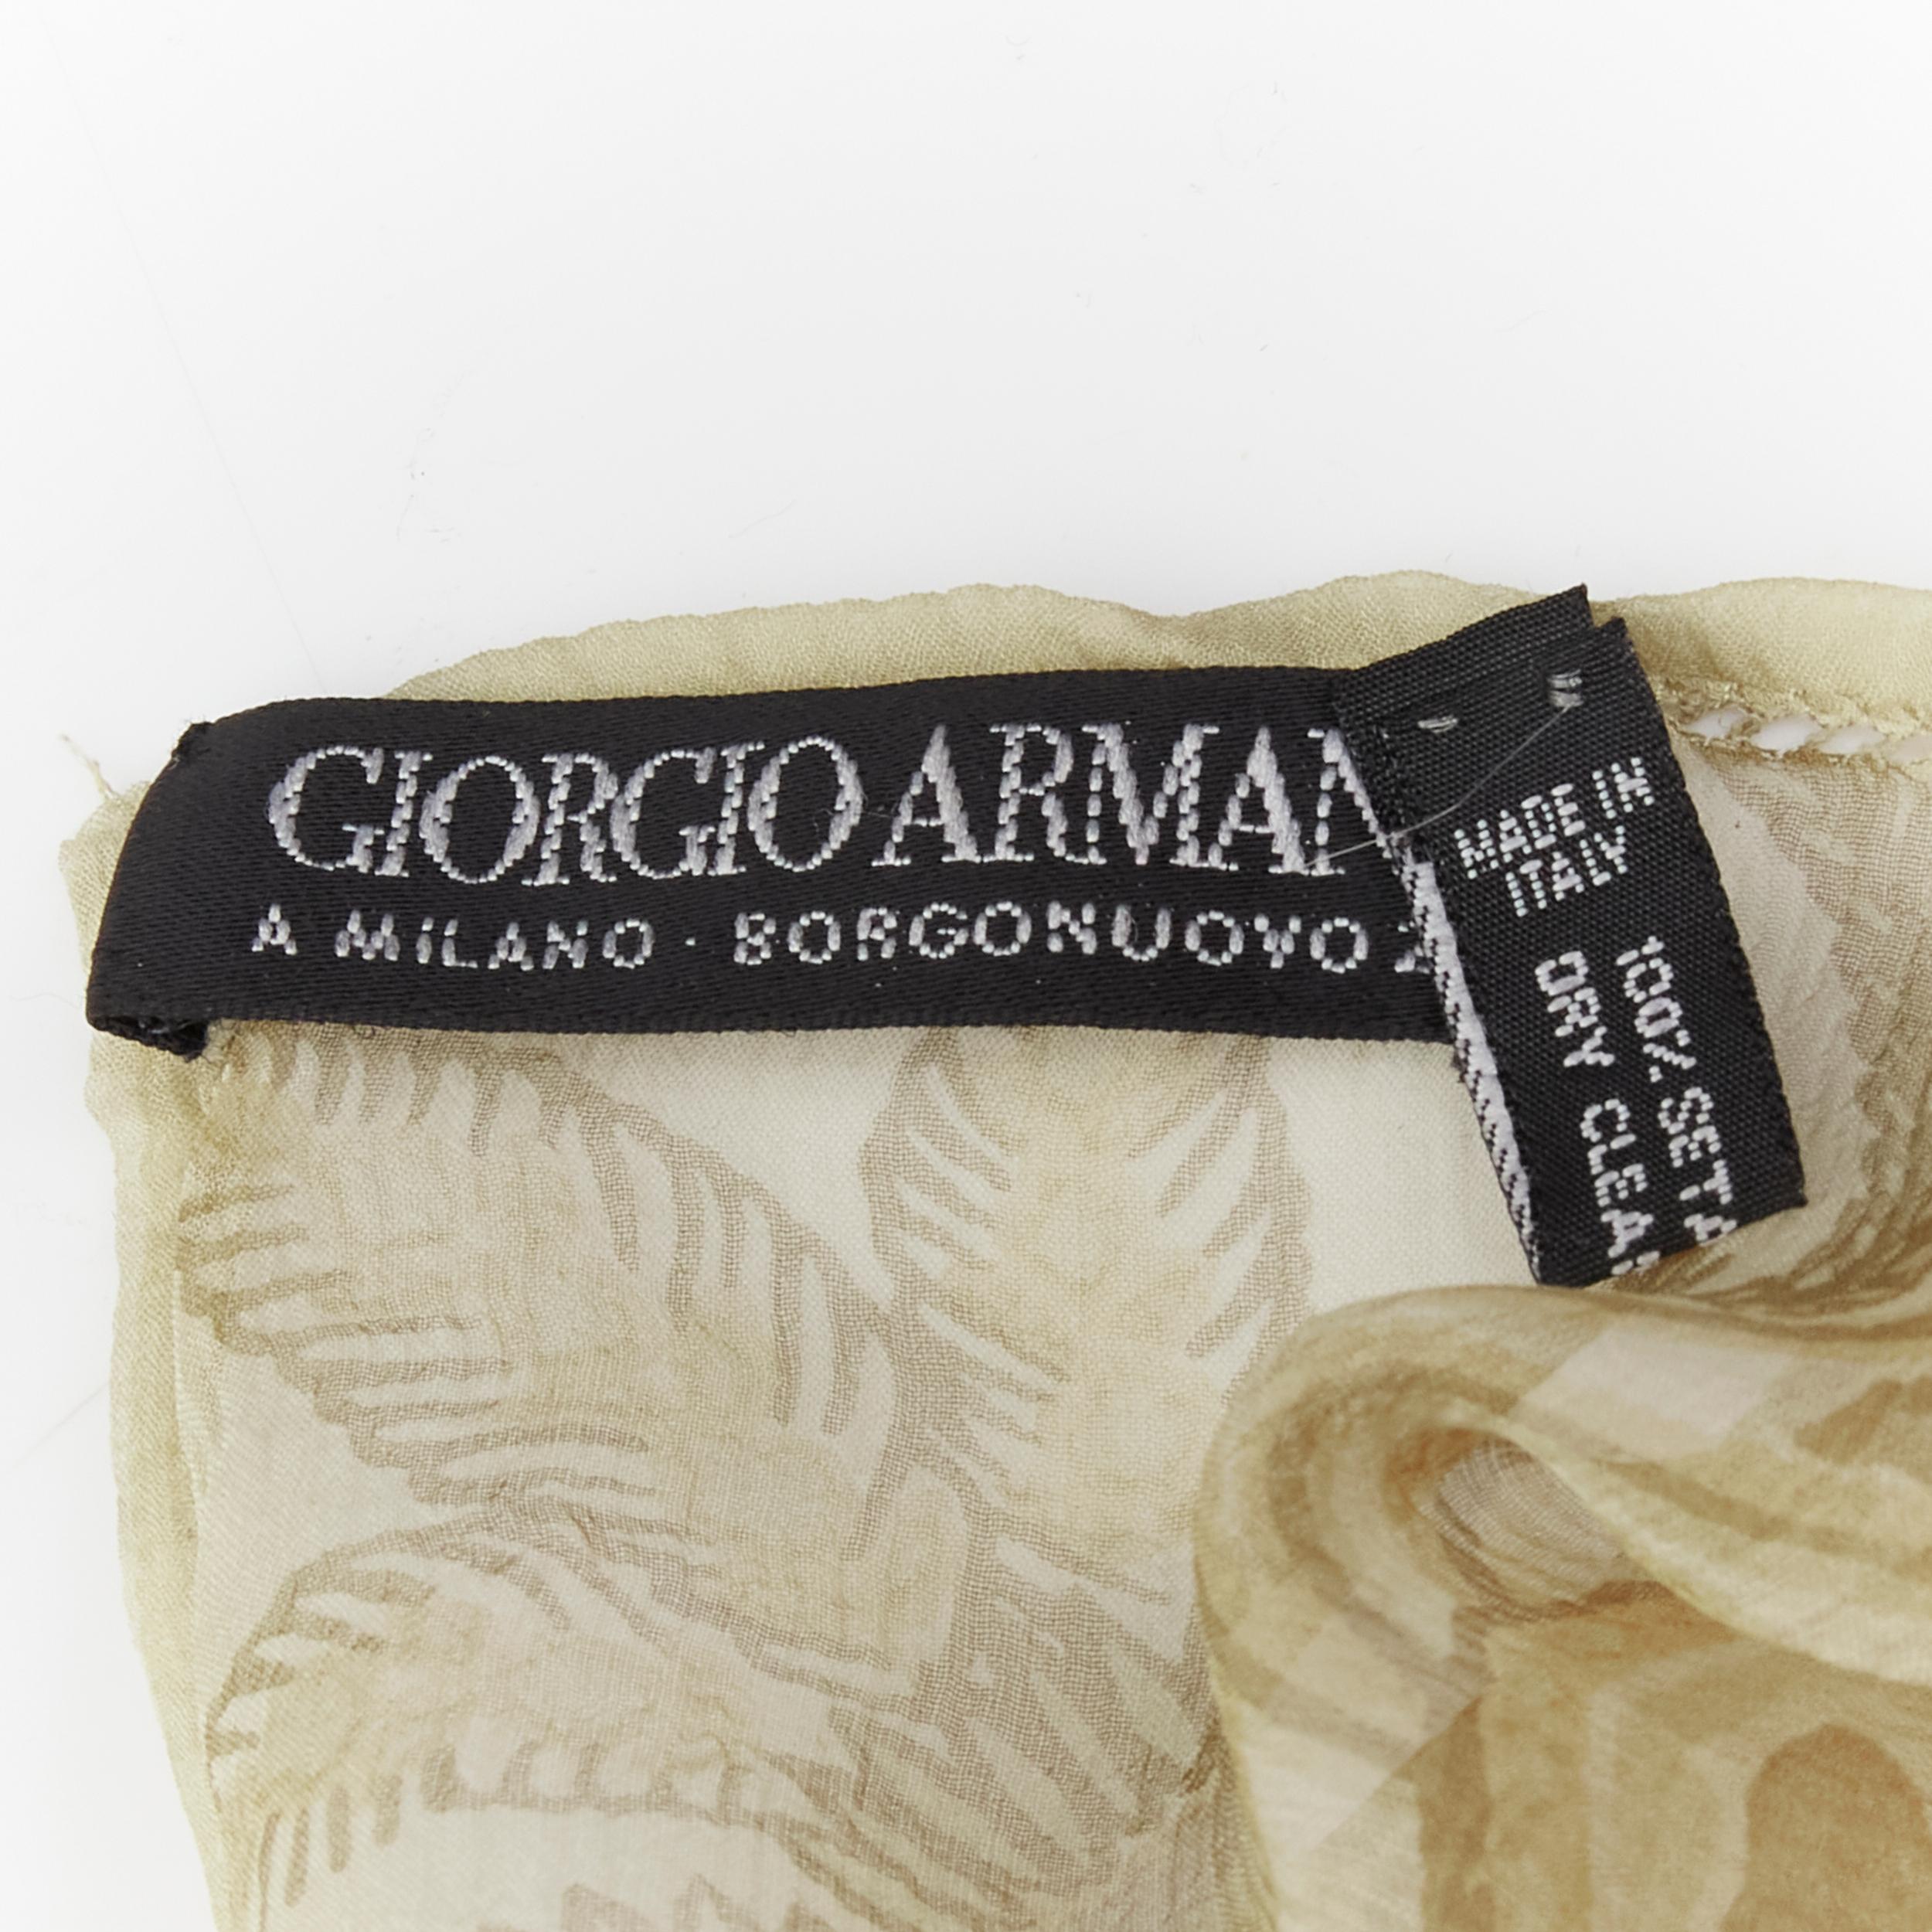 GIORGIO ARMANI  100% silk beige floral print sheer scarf For Sale 1